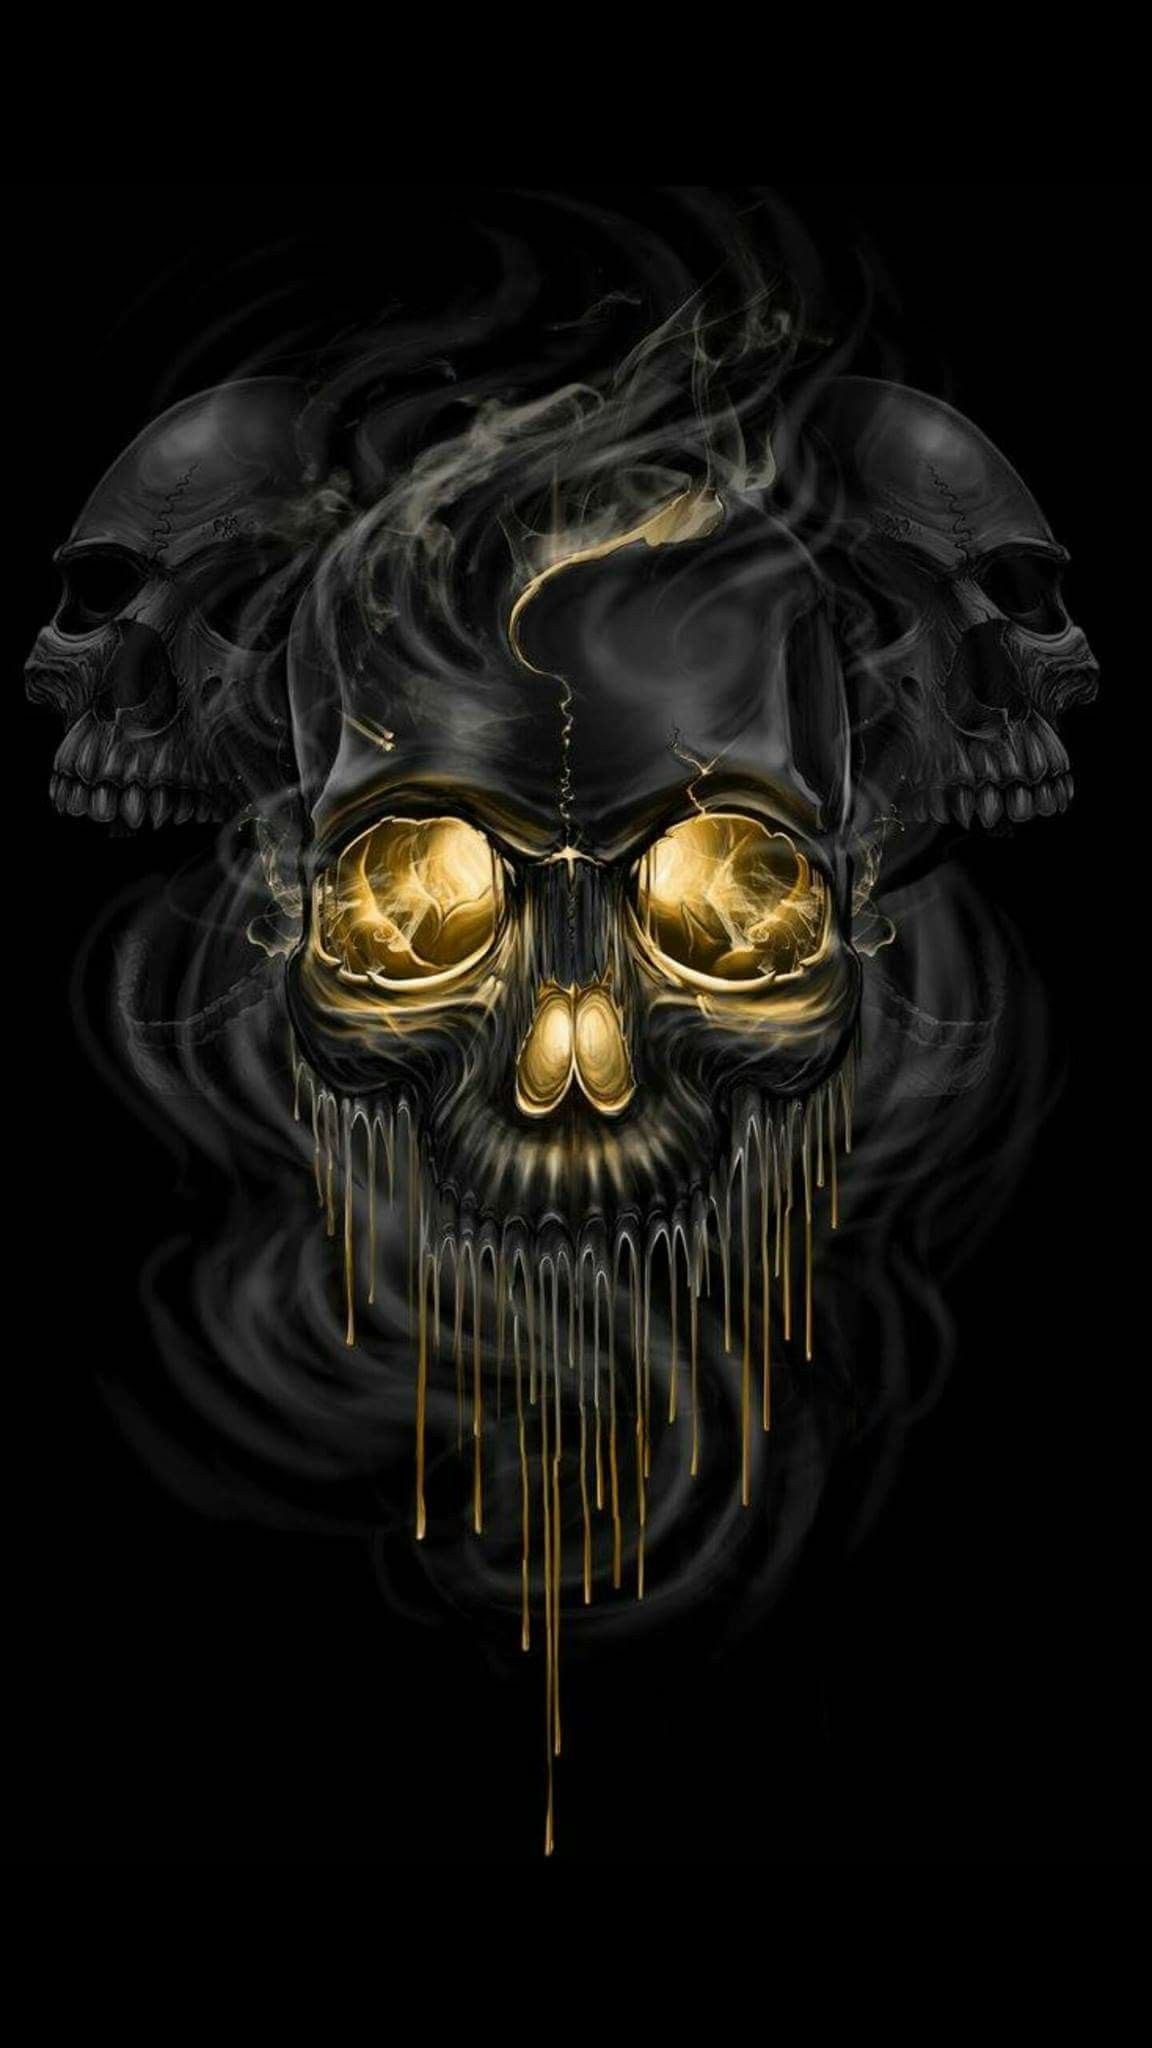 Skulls n' Shit by Terry W. Mccleary Jr. Skull wallpaper, Skull, Art